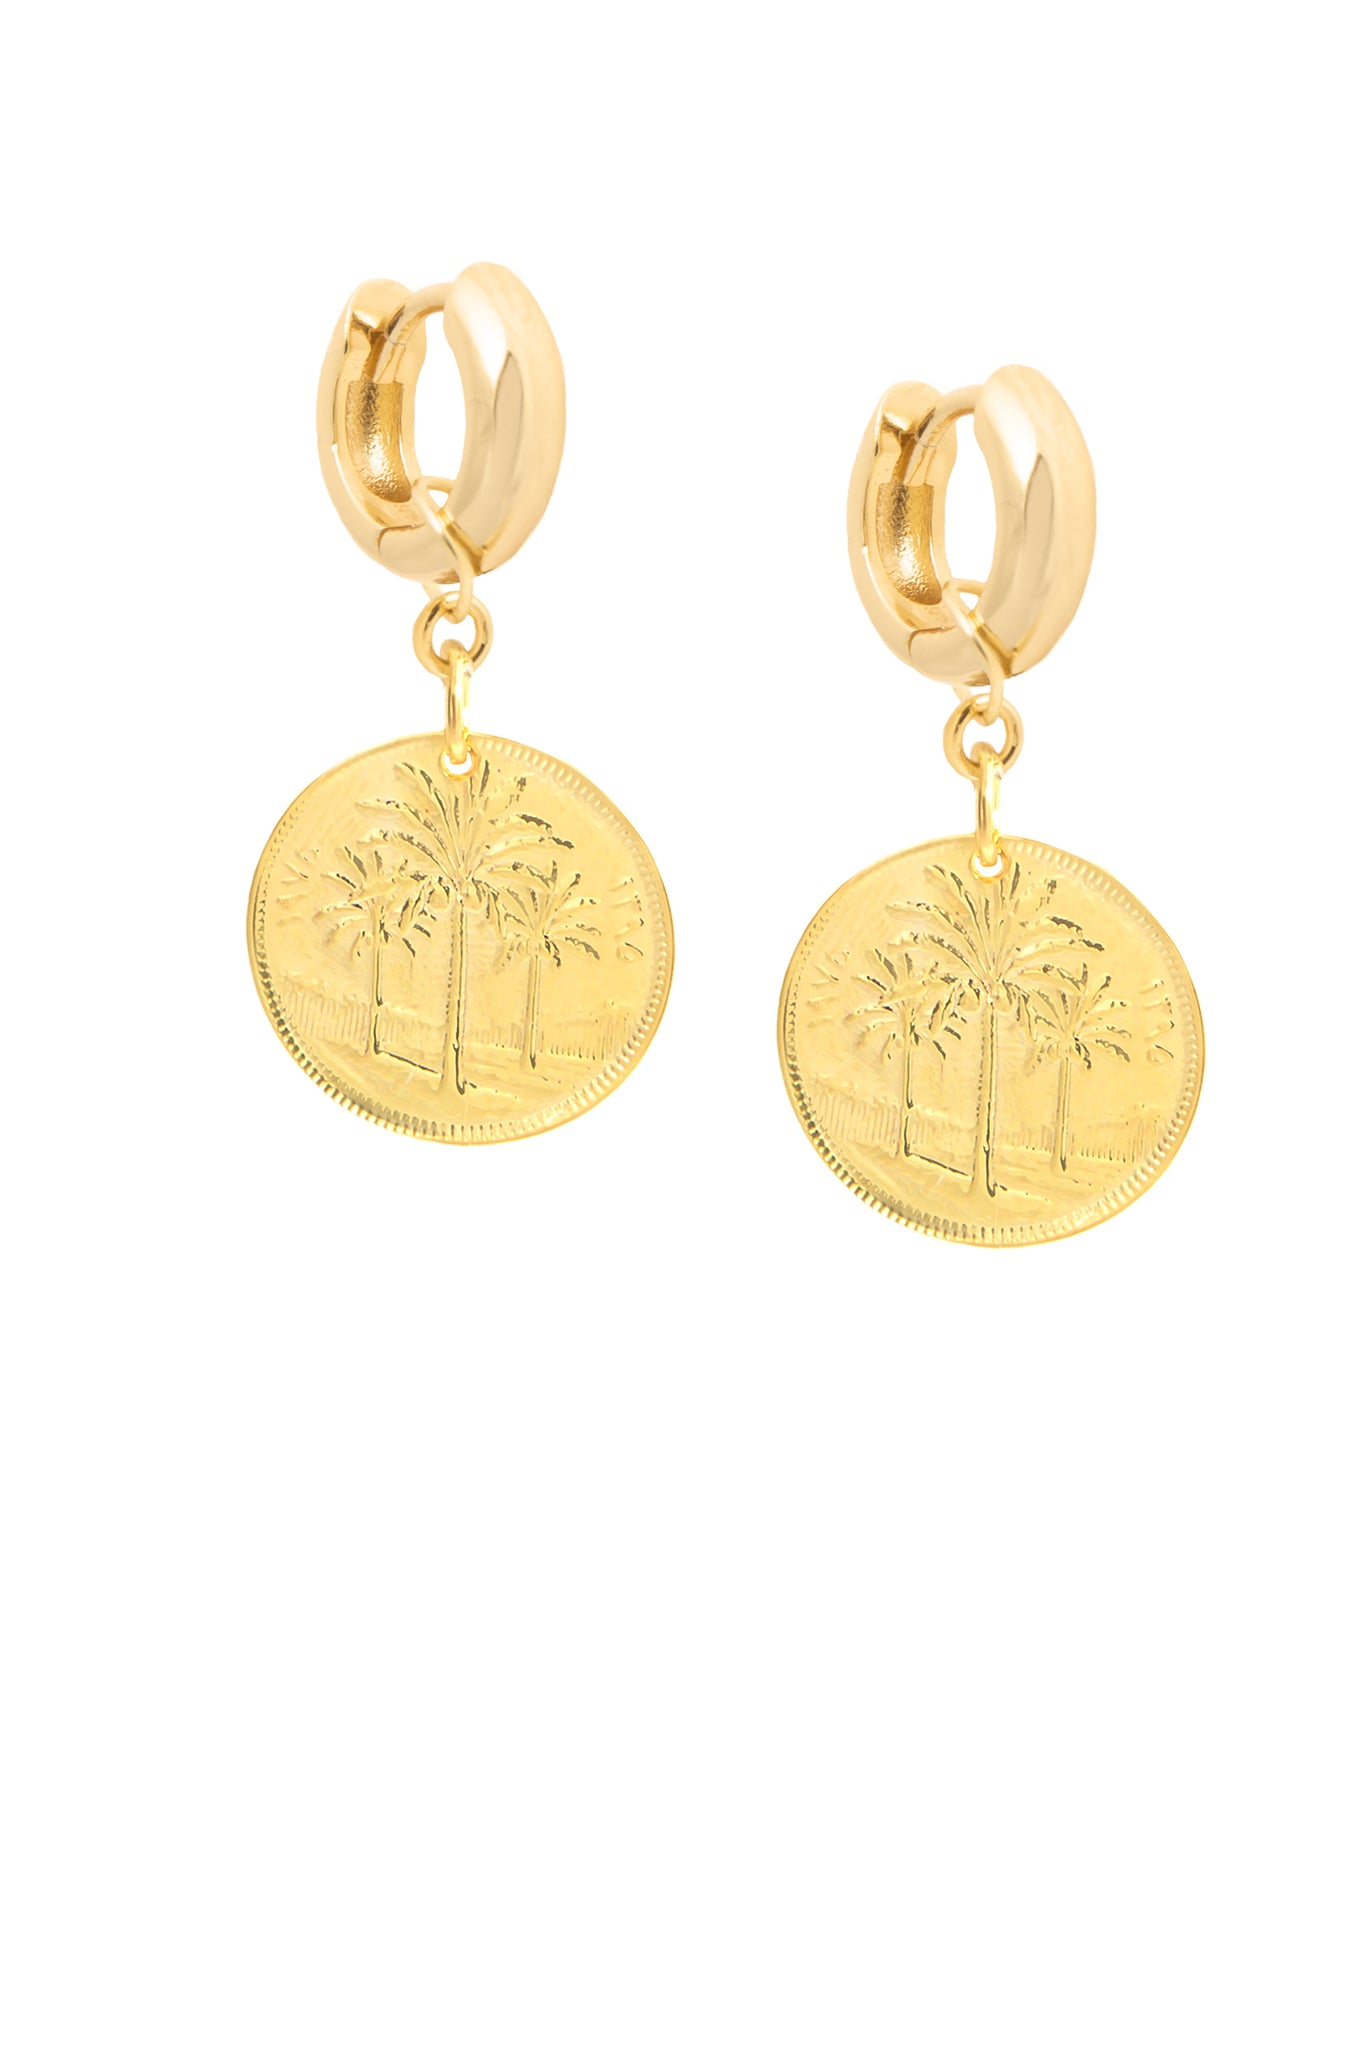 The Date Palm mini coin hoop earrings - PRE ORDER